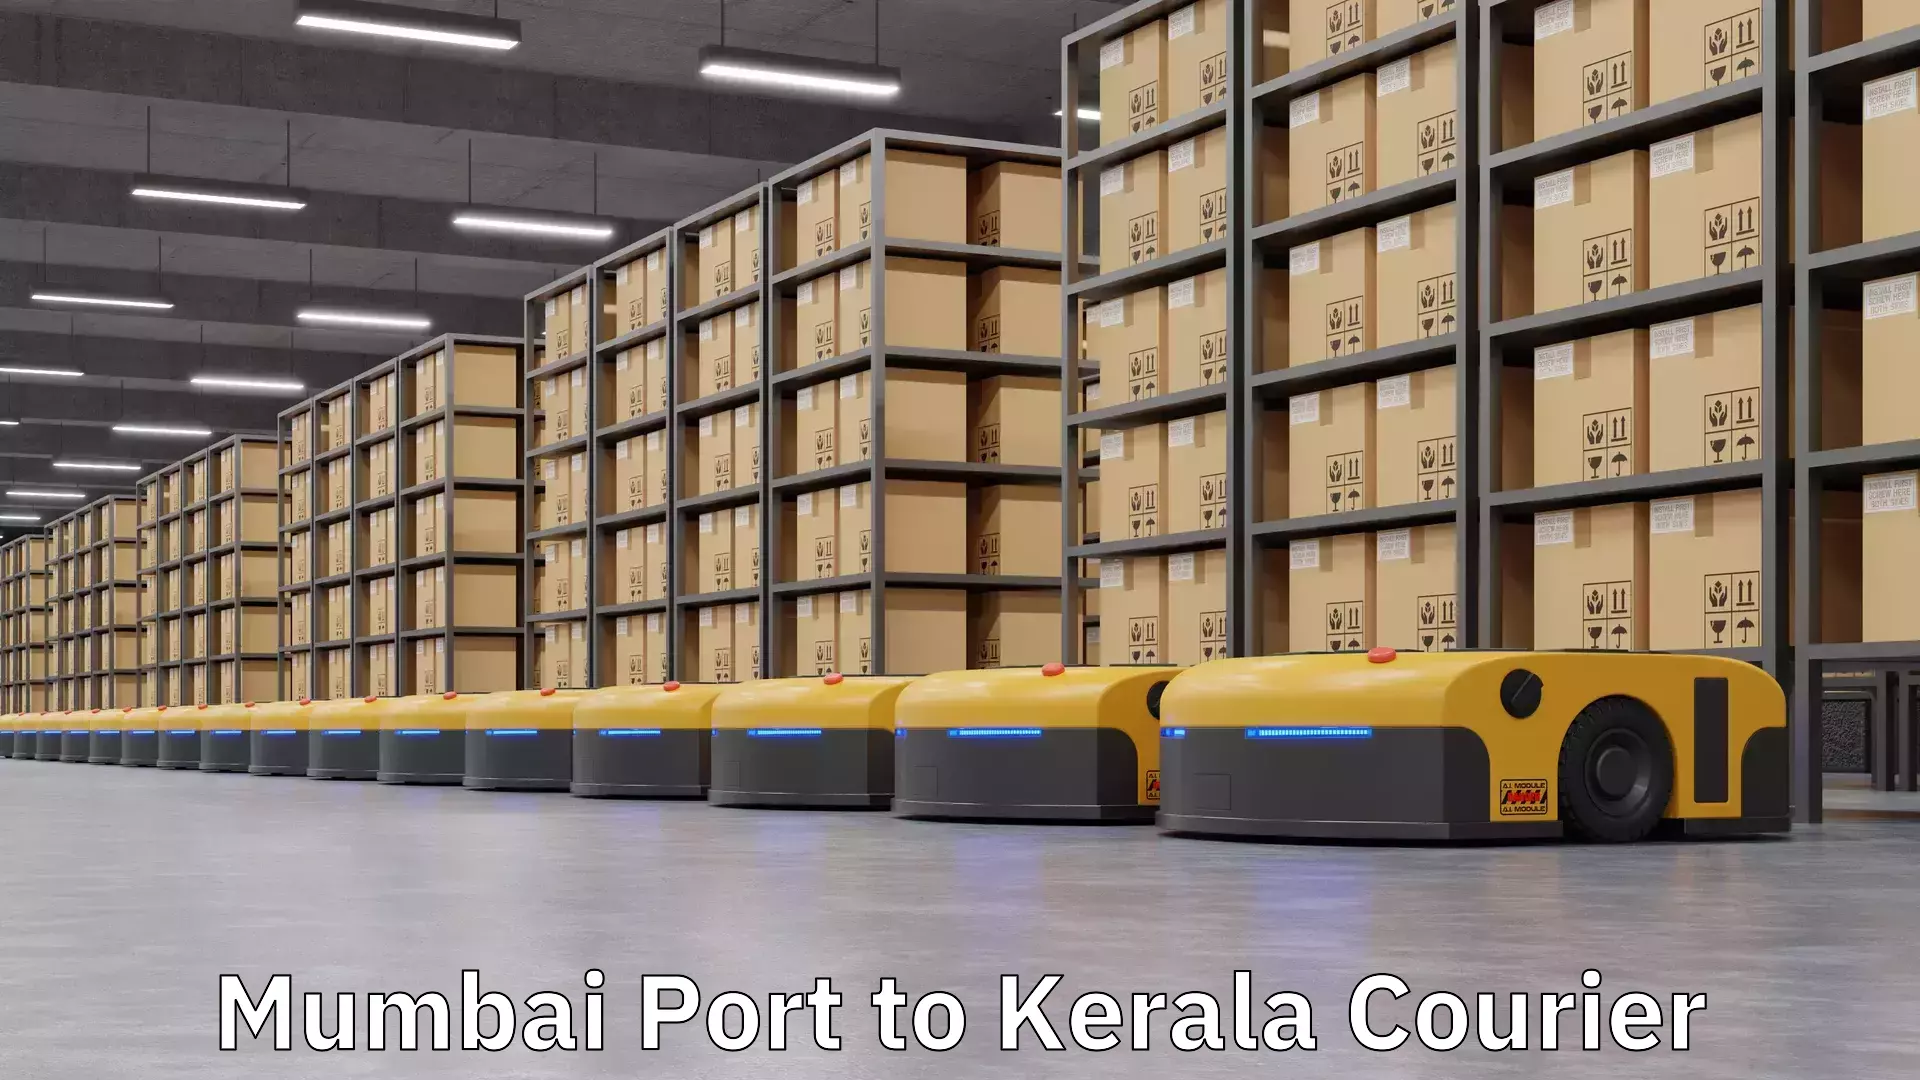 Express postal services in Mumbai Port to Kerala